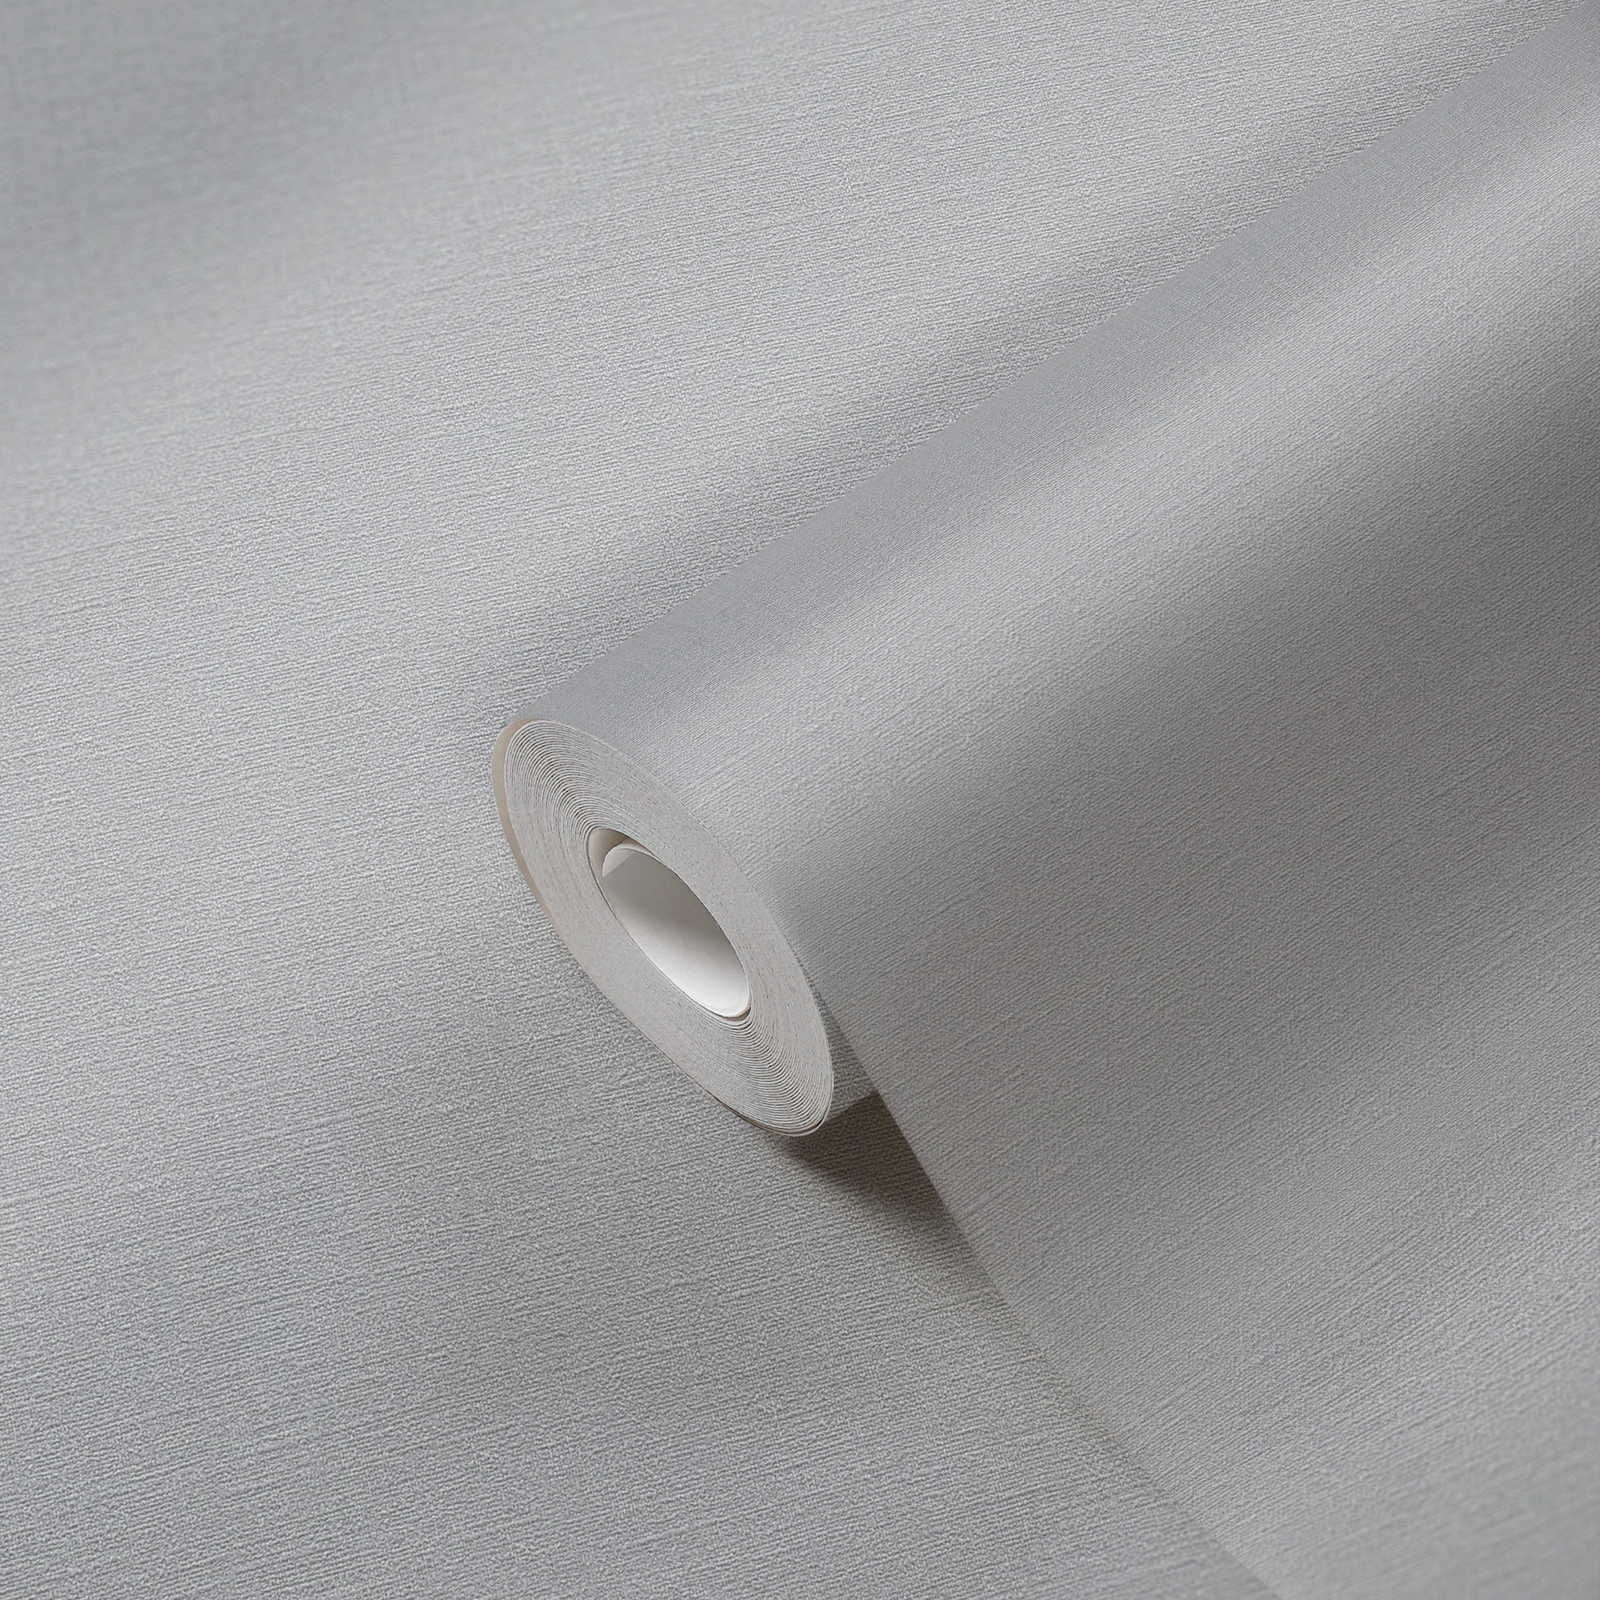             Carta da parati in tessuto non tessuto a tinta unita con struttura tessile leggera senza PVC - beige
        